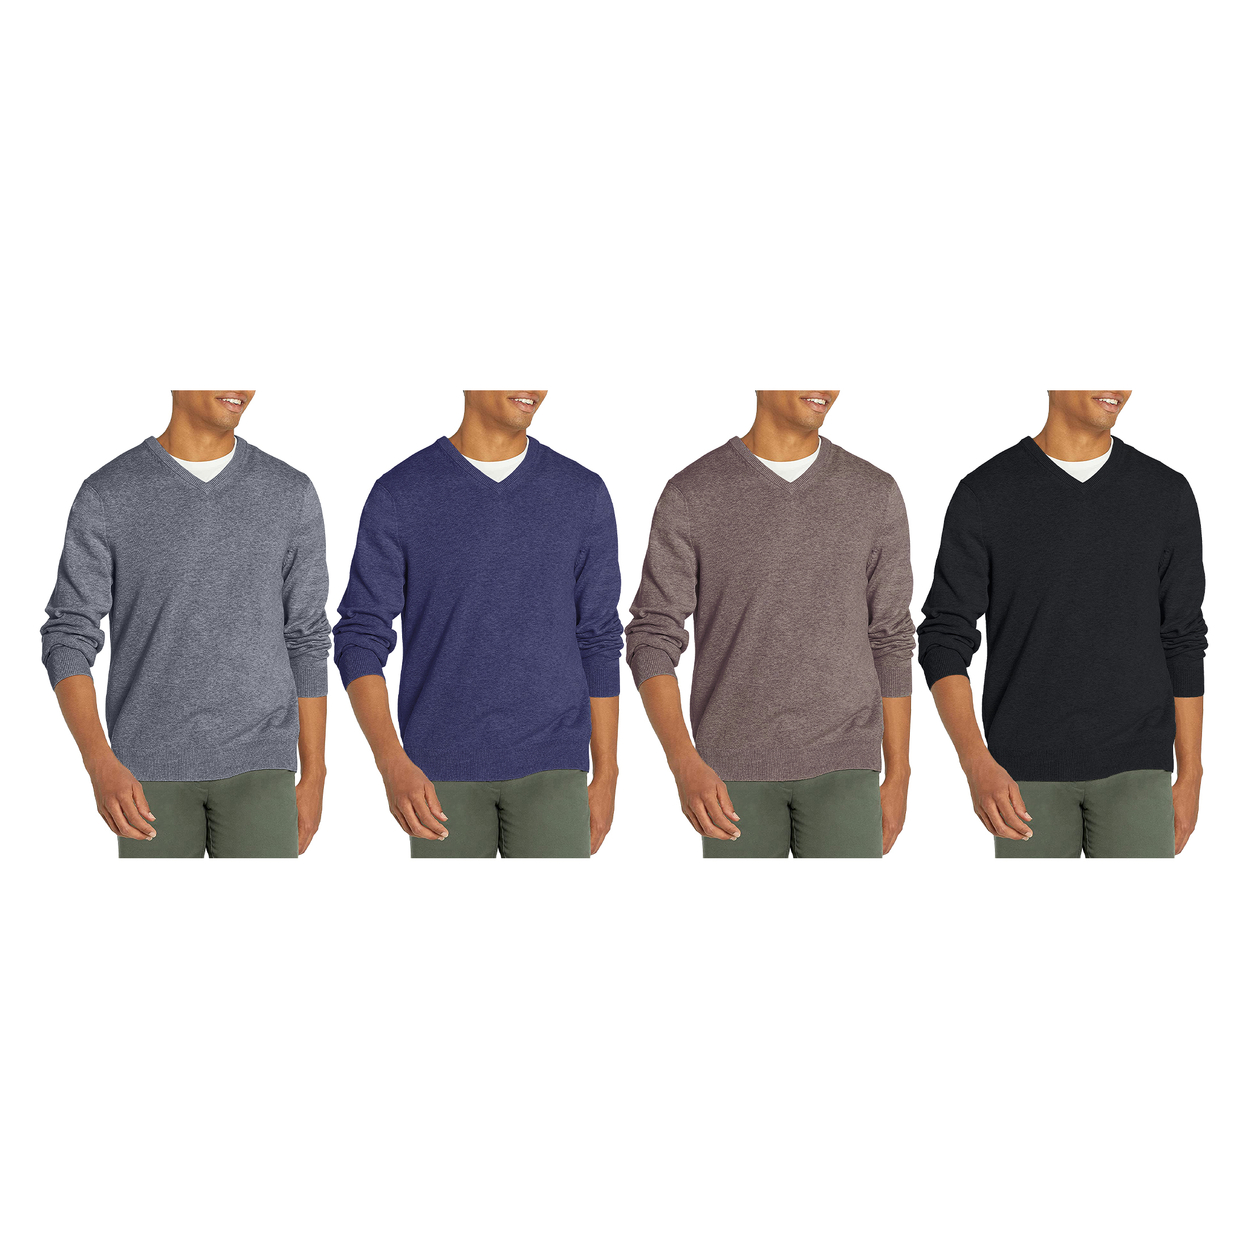 2-Pack: Men's Casual Ultra Soft Slim Fit Warm Knit V-Neck Sweater - Black & Grey, X-large